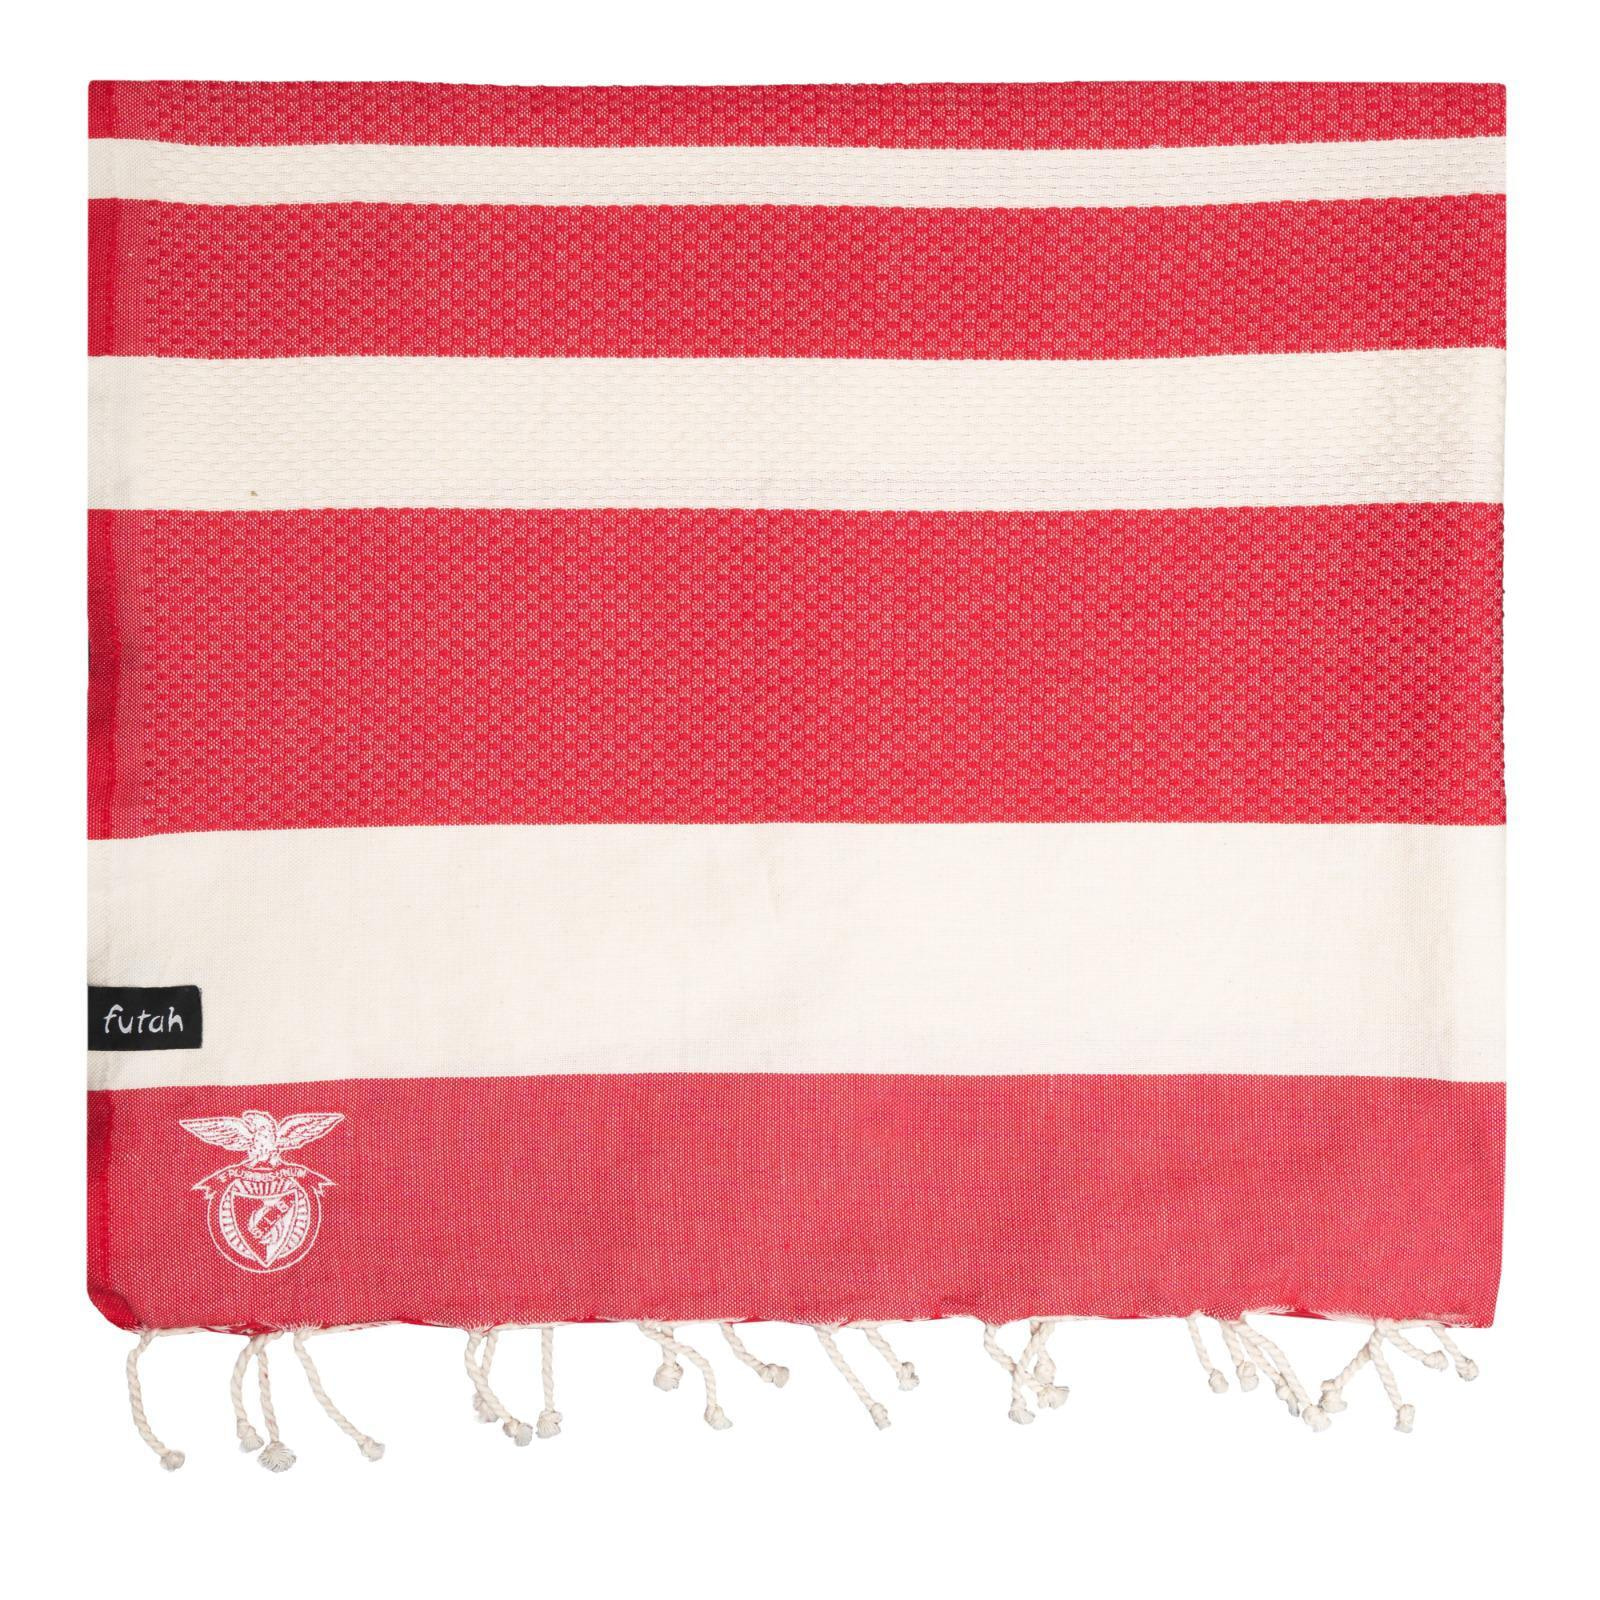 Futah Sport Lisboa e Benfica Red Stripes Towel